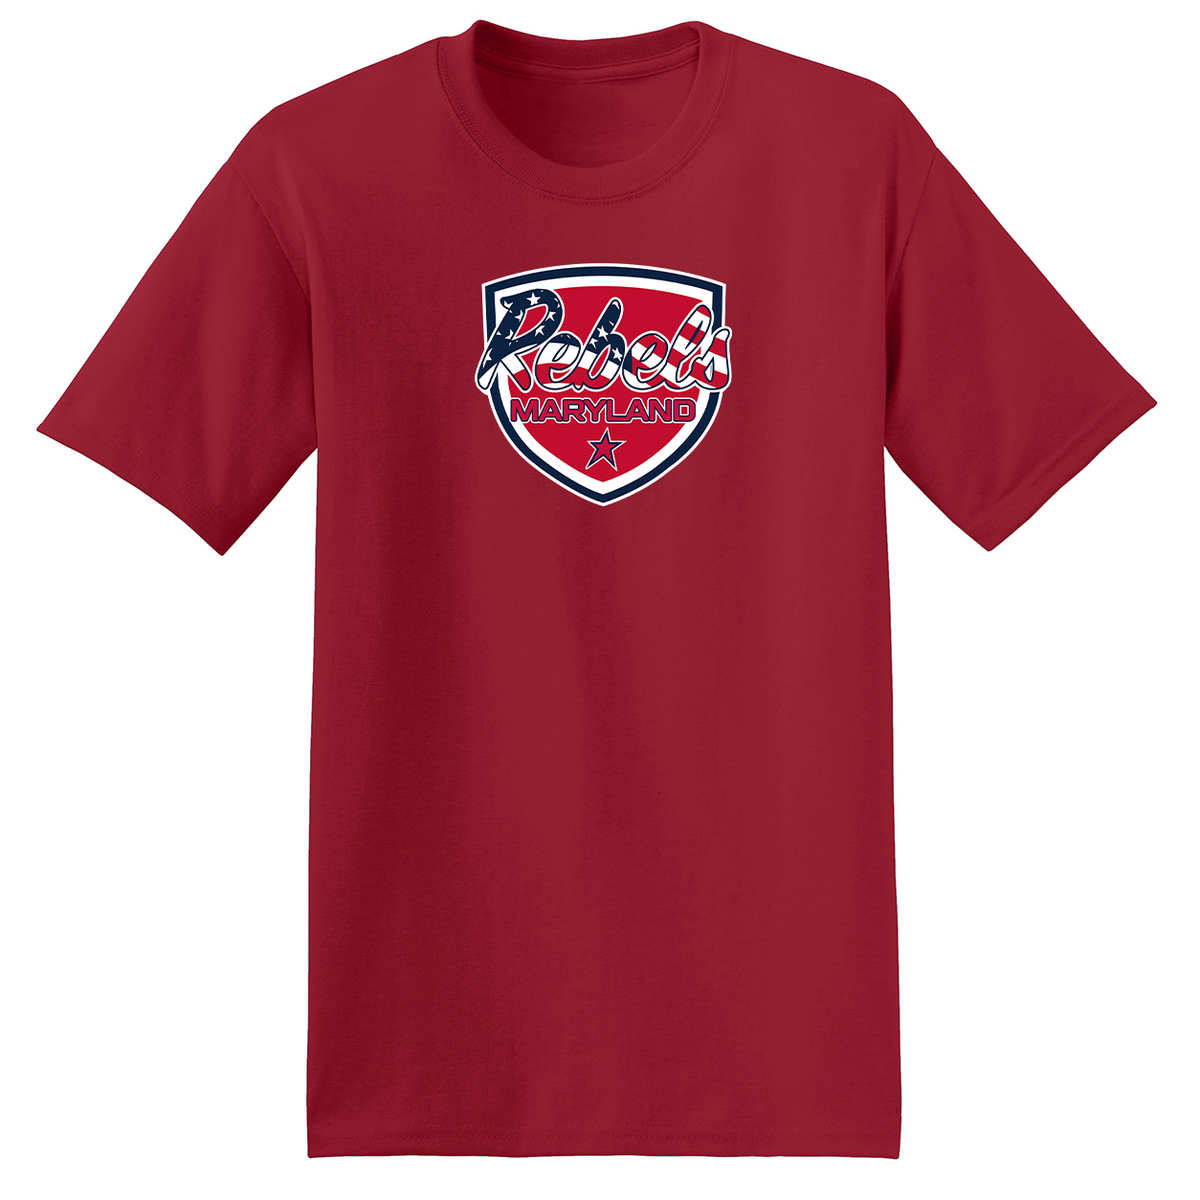 Rebels Maryland T-Shirt